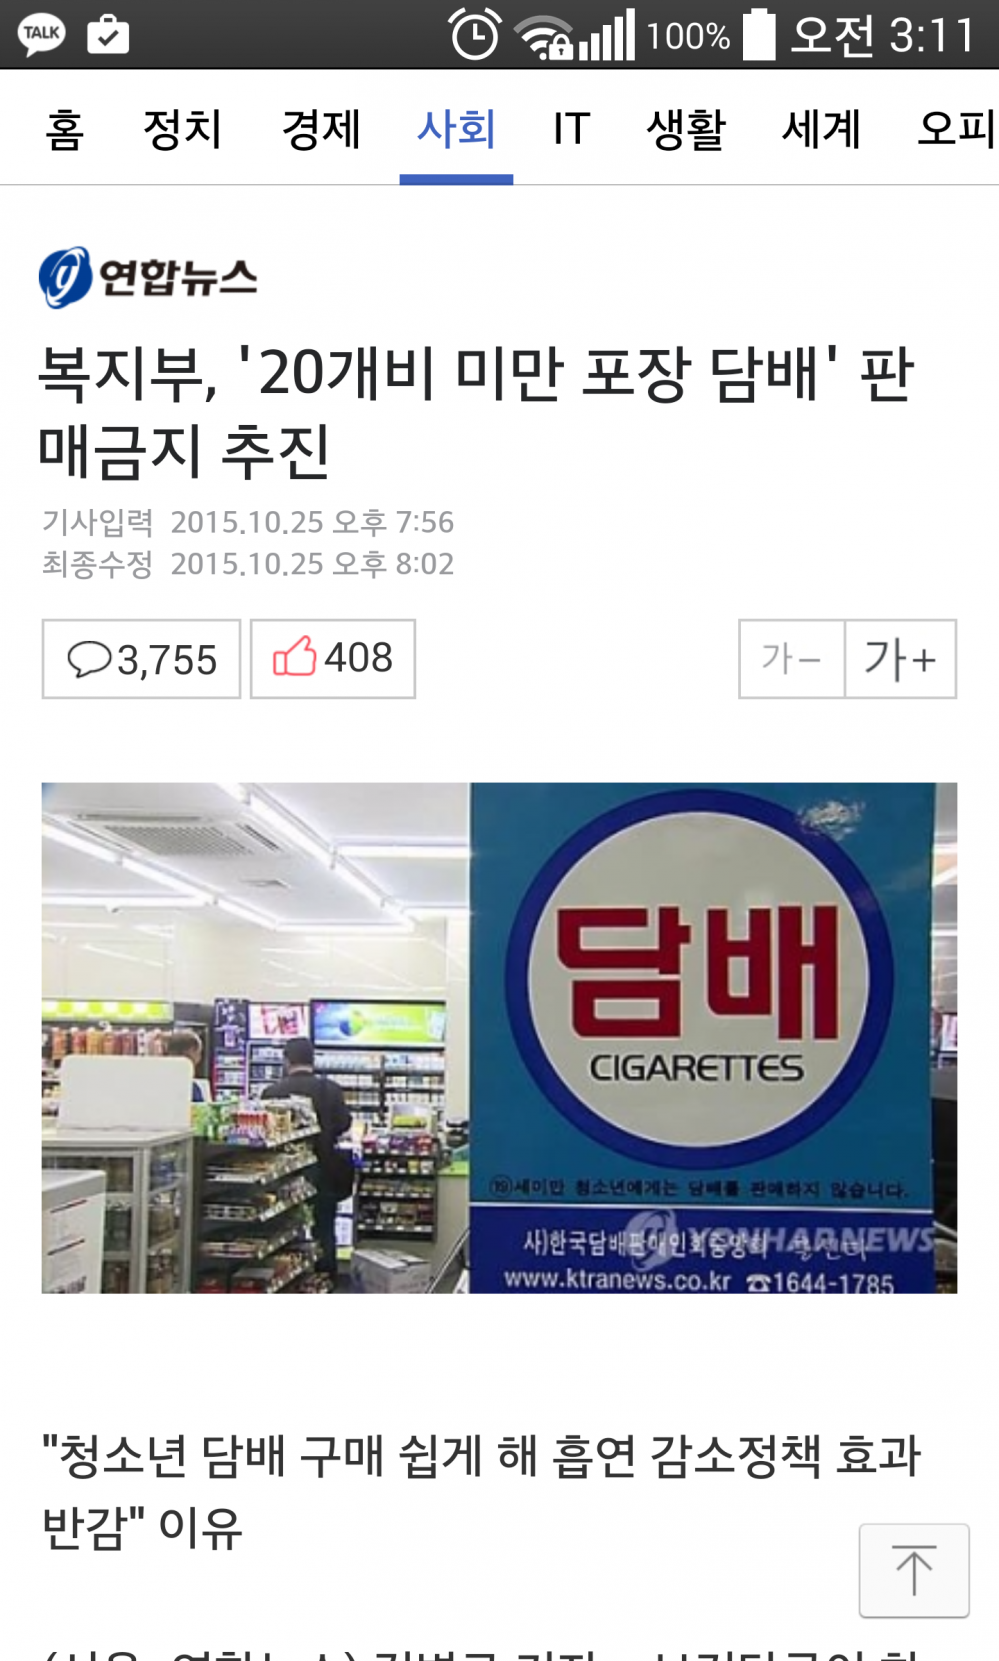 QMemo+_2015-10-26-03-11-21.png : 담배 소량포장 판매 금지